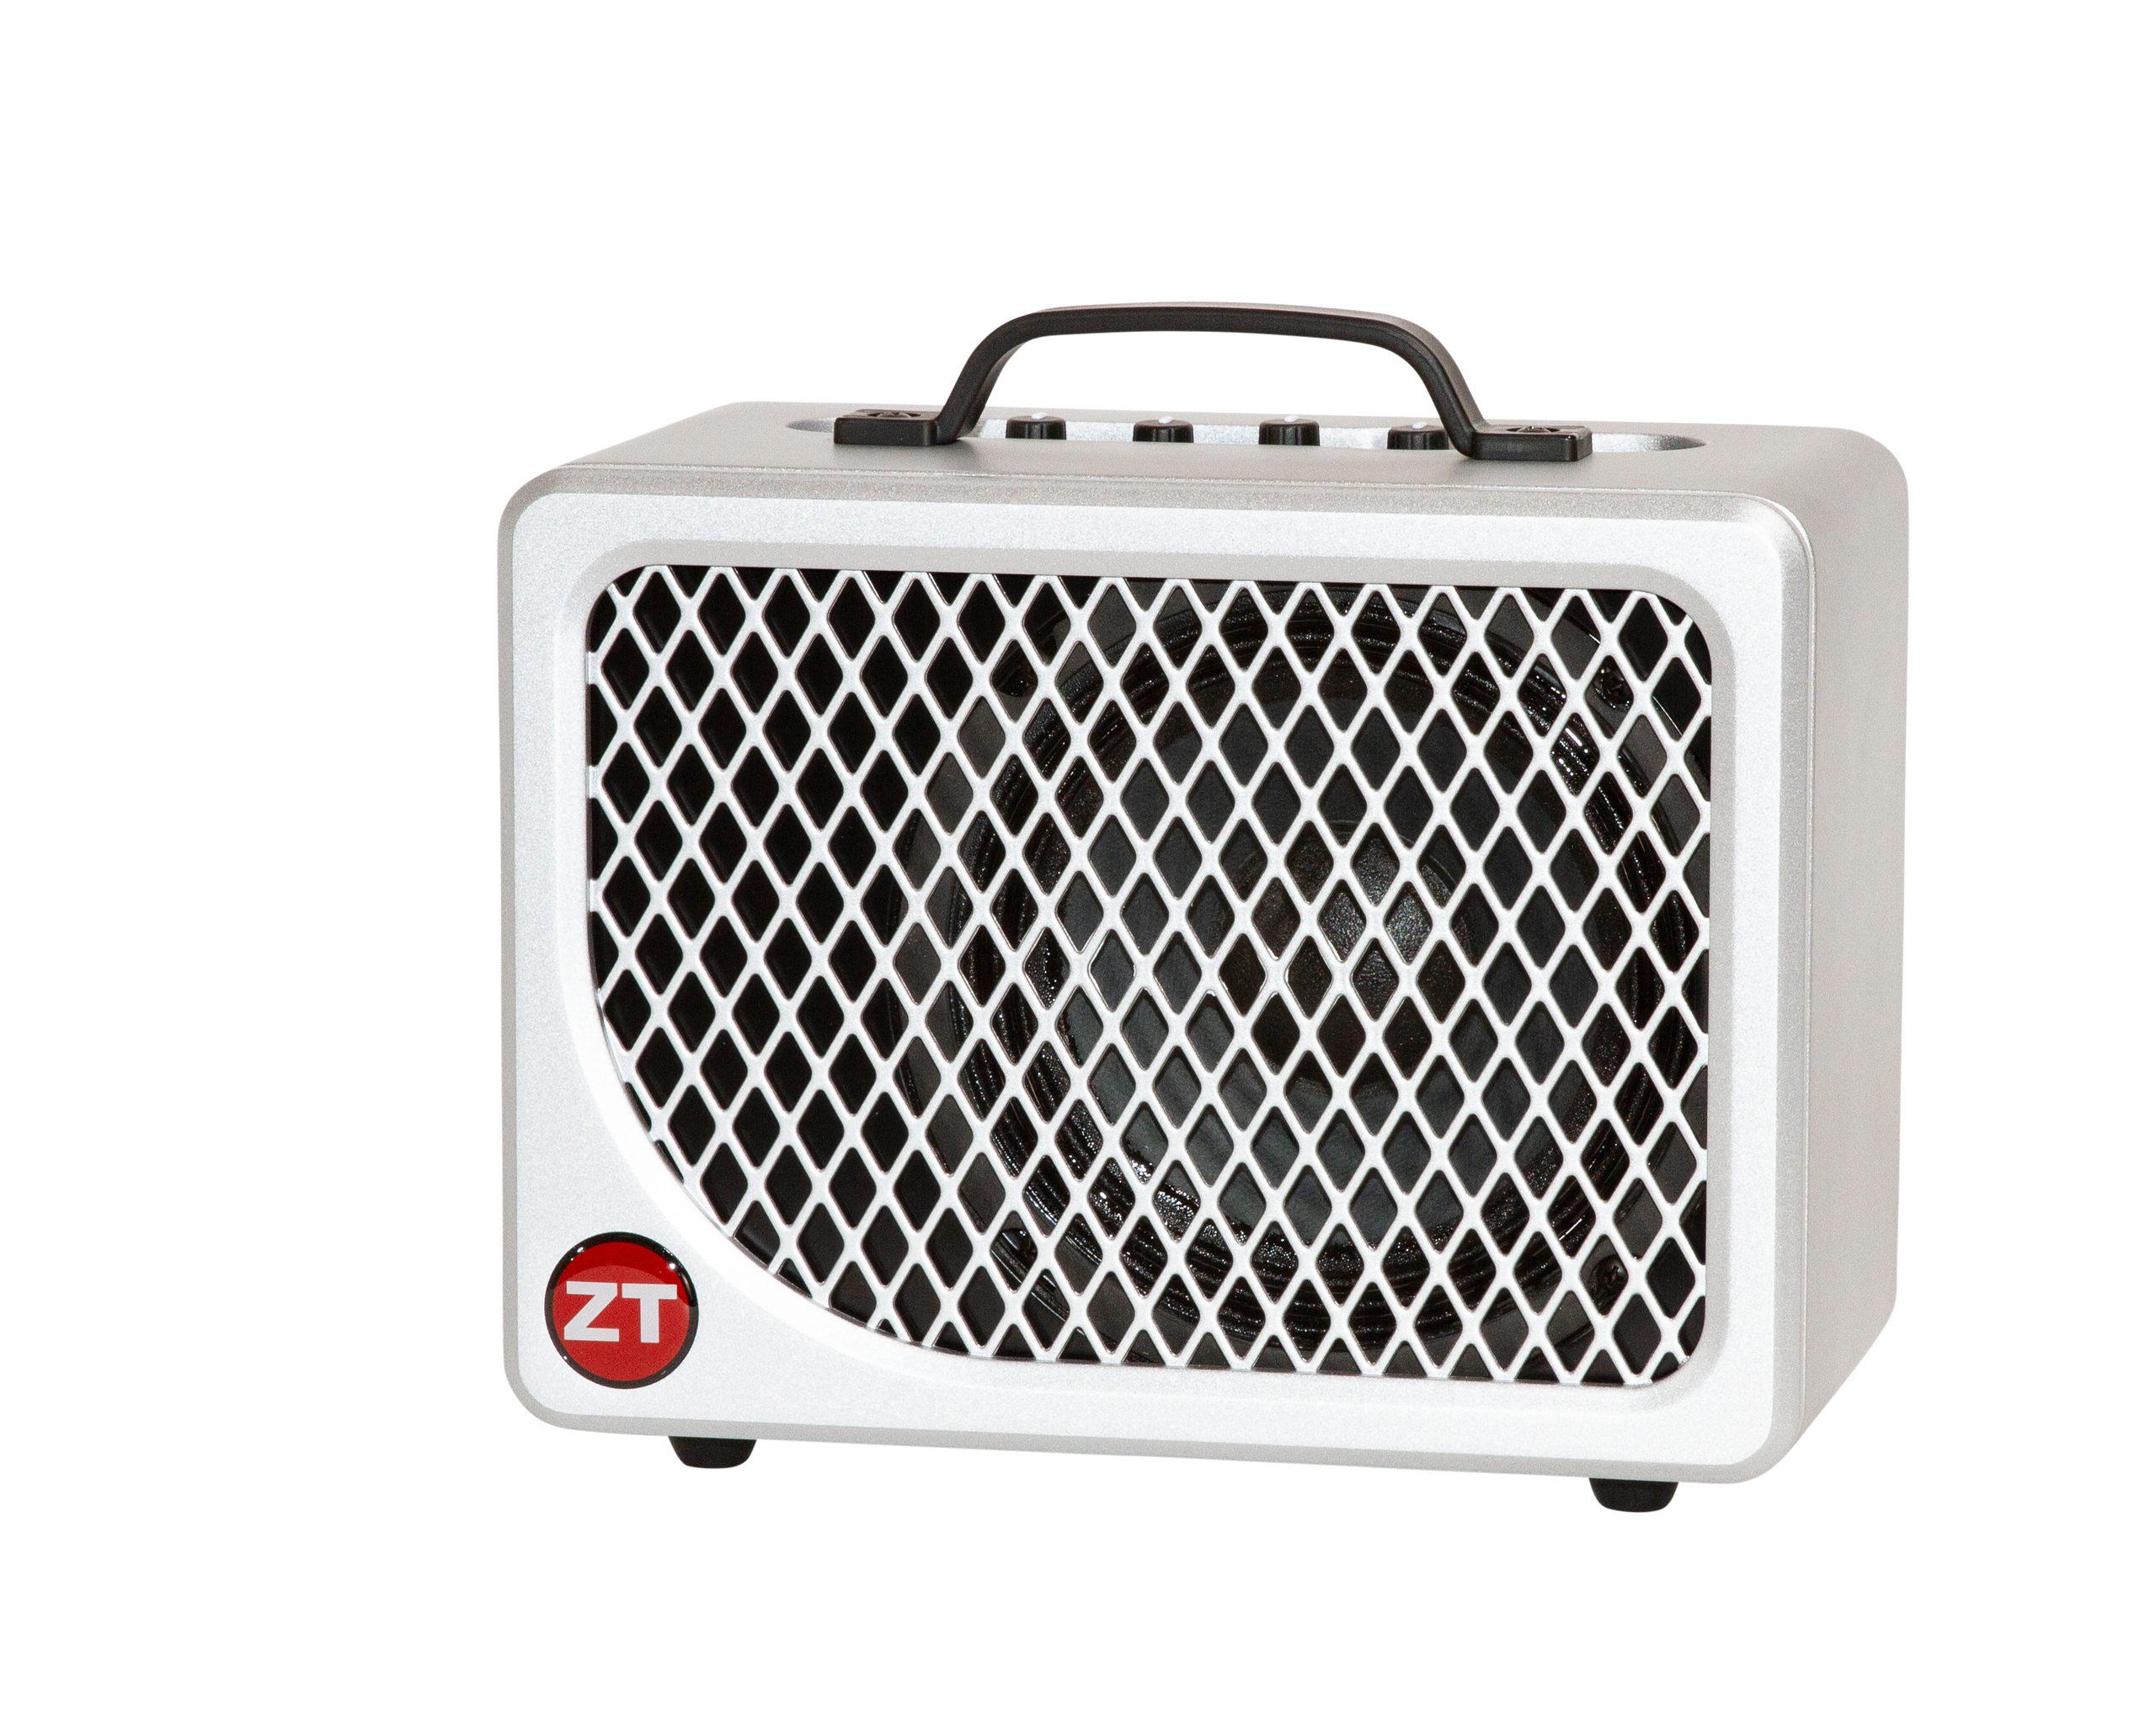 ZT AMP Lunchbox Jr.LBJ1 アンプ 楽器/器材 おもちゃ・ホビー・グッズ オンライン 通販